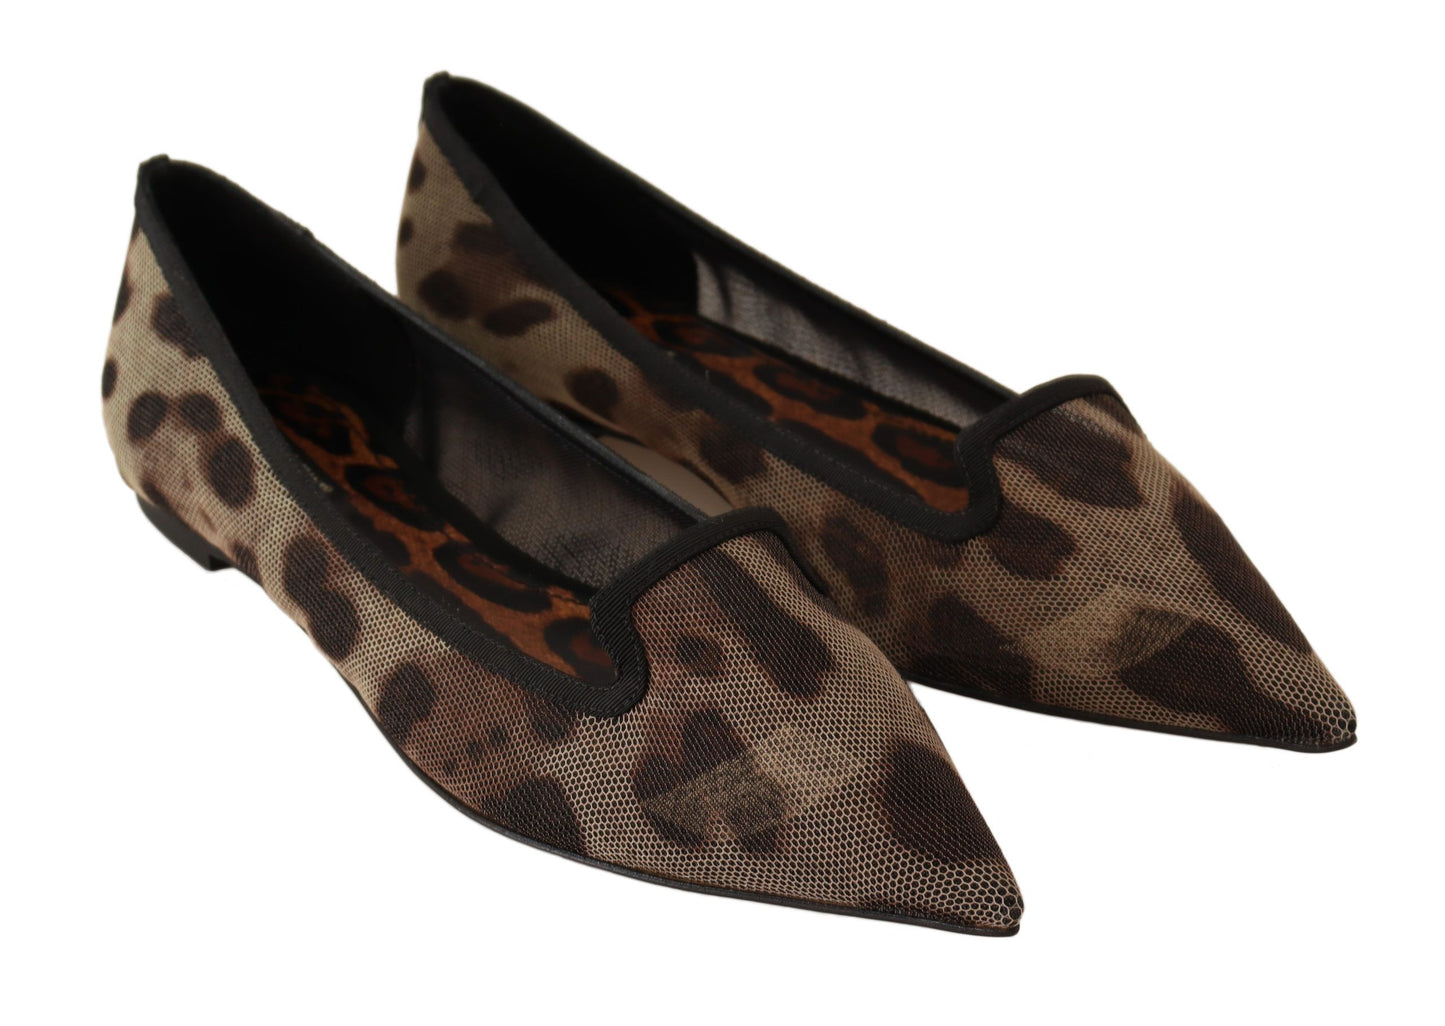 Elegant Leopard Print Flat Loafers